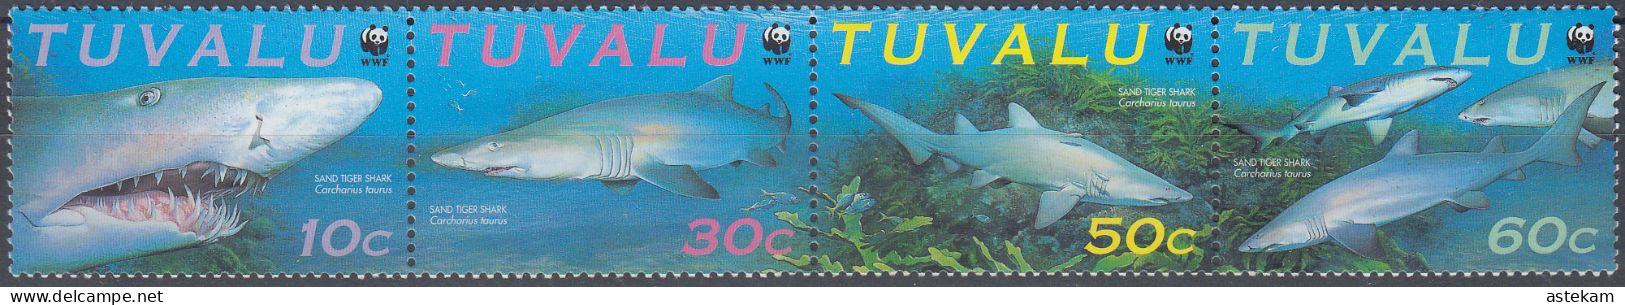 TUVALU 2000, MARINE FAUNA, WWF, SHARKS, COMPLETE MNH SERIES With GOOD QUALITY, *** - Tuvalu